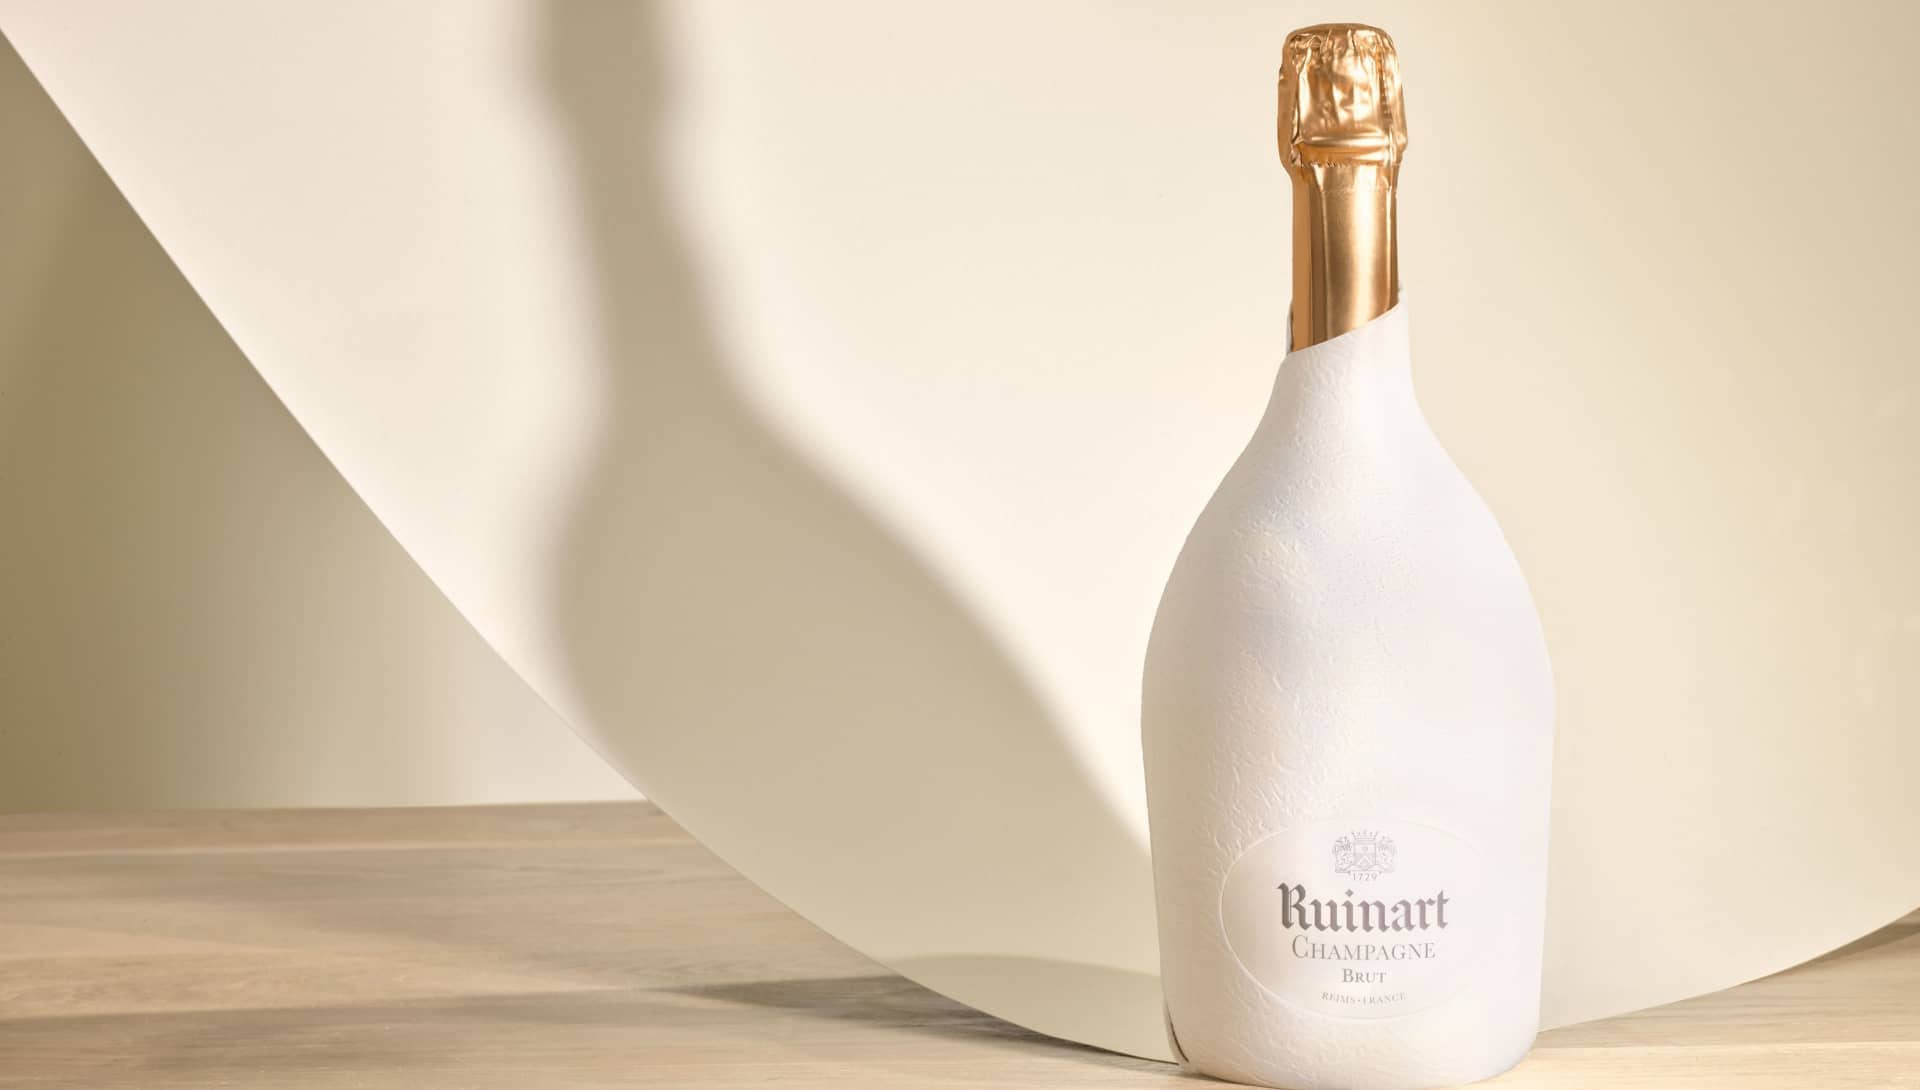 Champagne R de Ruinart - Wine Palette - Best Wine Import Solution